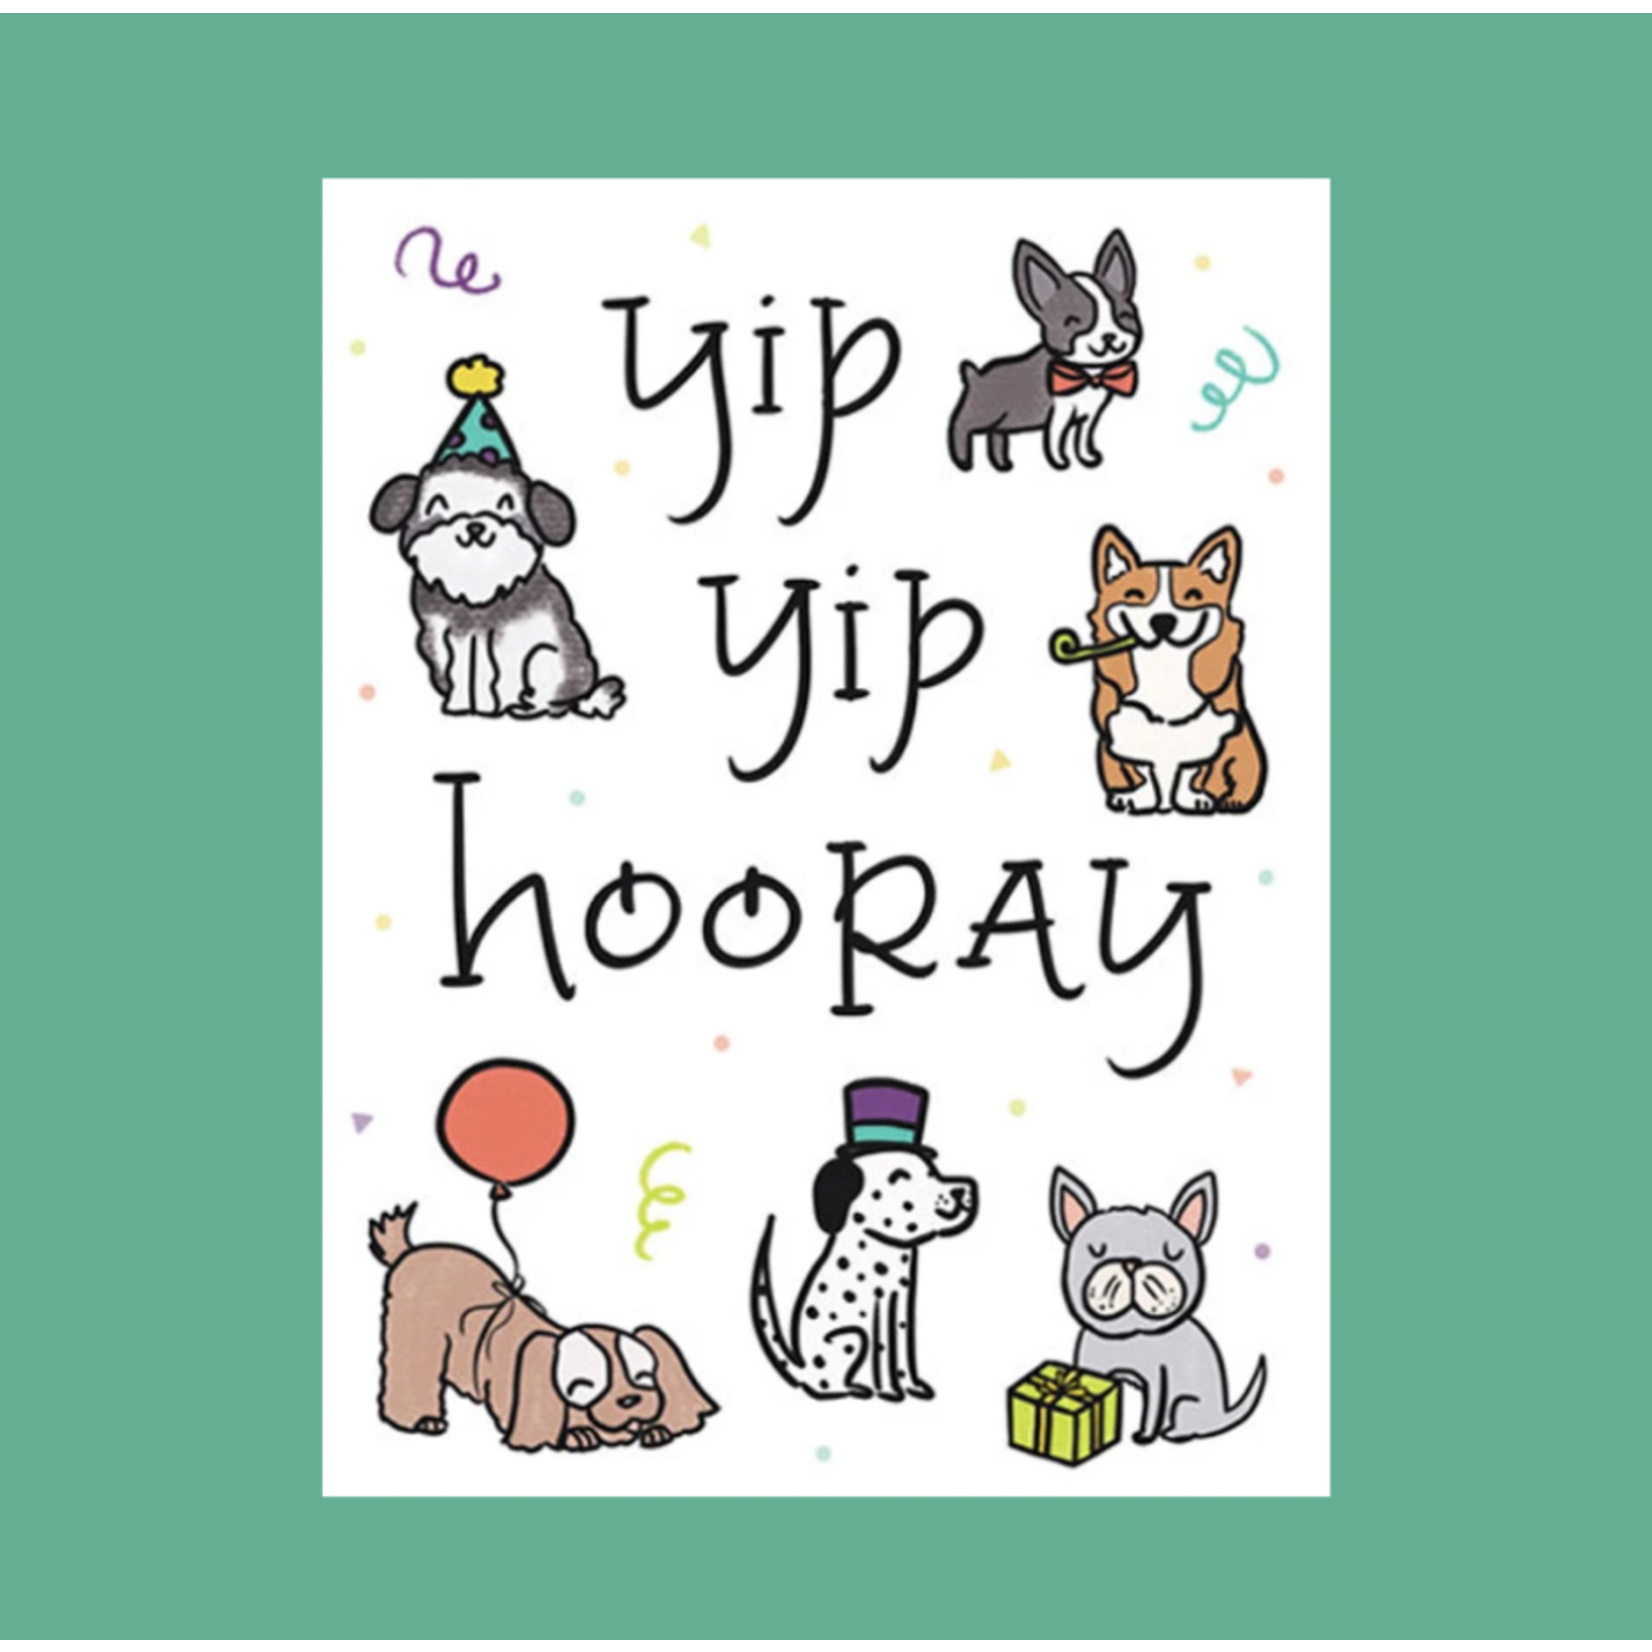 Lacelit (APO) Yip Yip Hooray Dogs Birthday Greeting Card